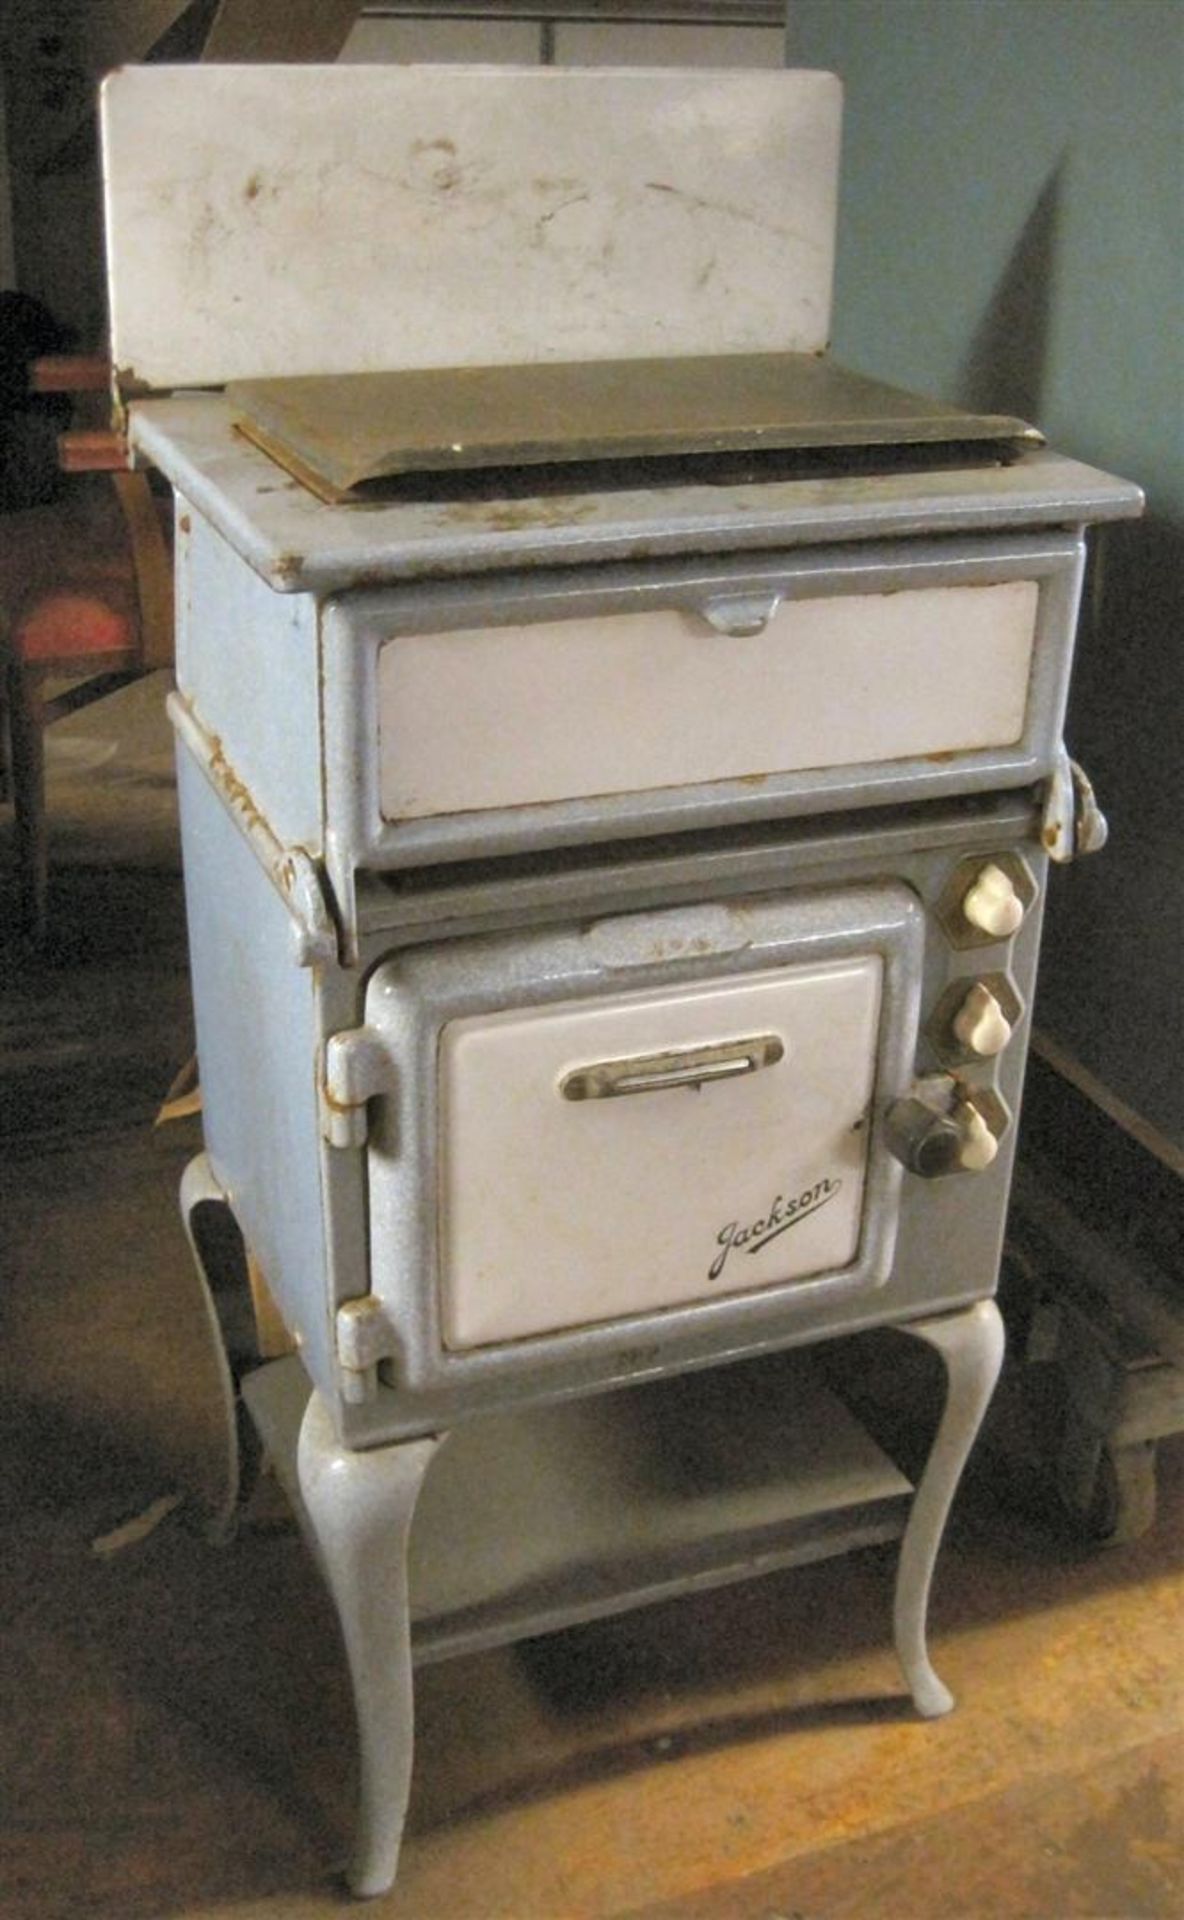 Jackson free standing enameled steel stove